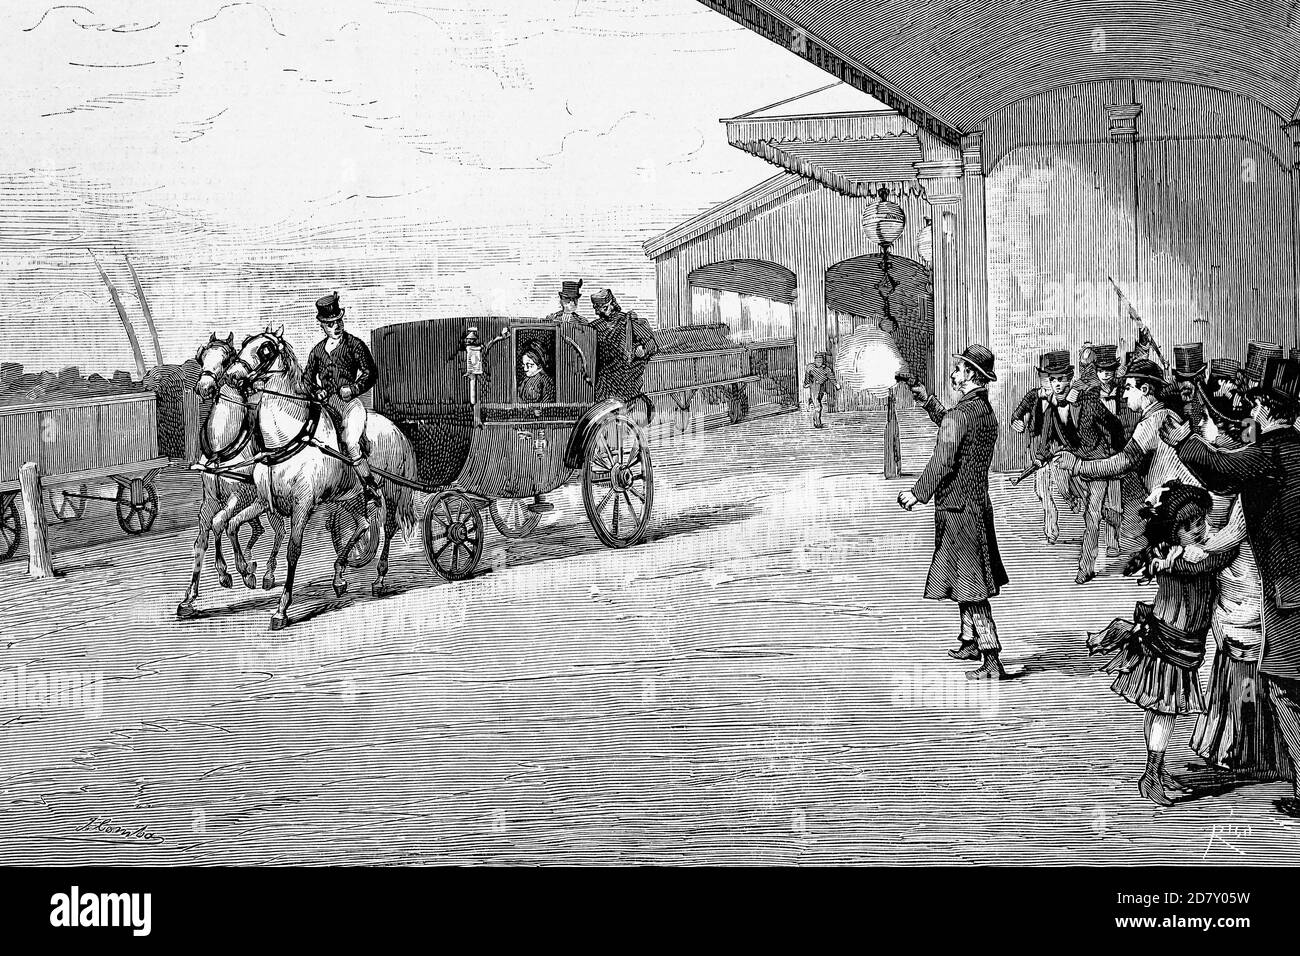 Windsor Station, el regicidio escocés Roderick Maclean dispara a la Reina Victoria, 2. Marzo de 1882, en un ataque fallido. Ilustración antigua. 1882. Foto de stock